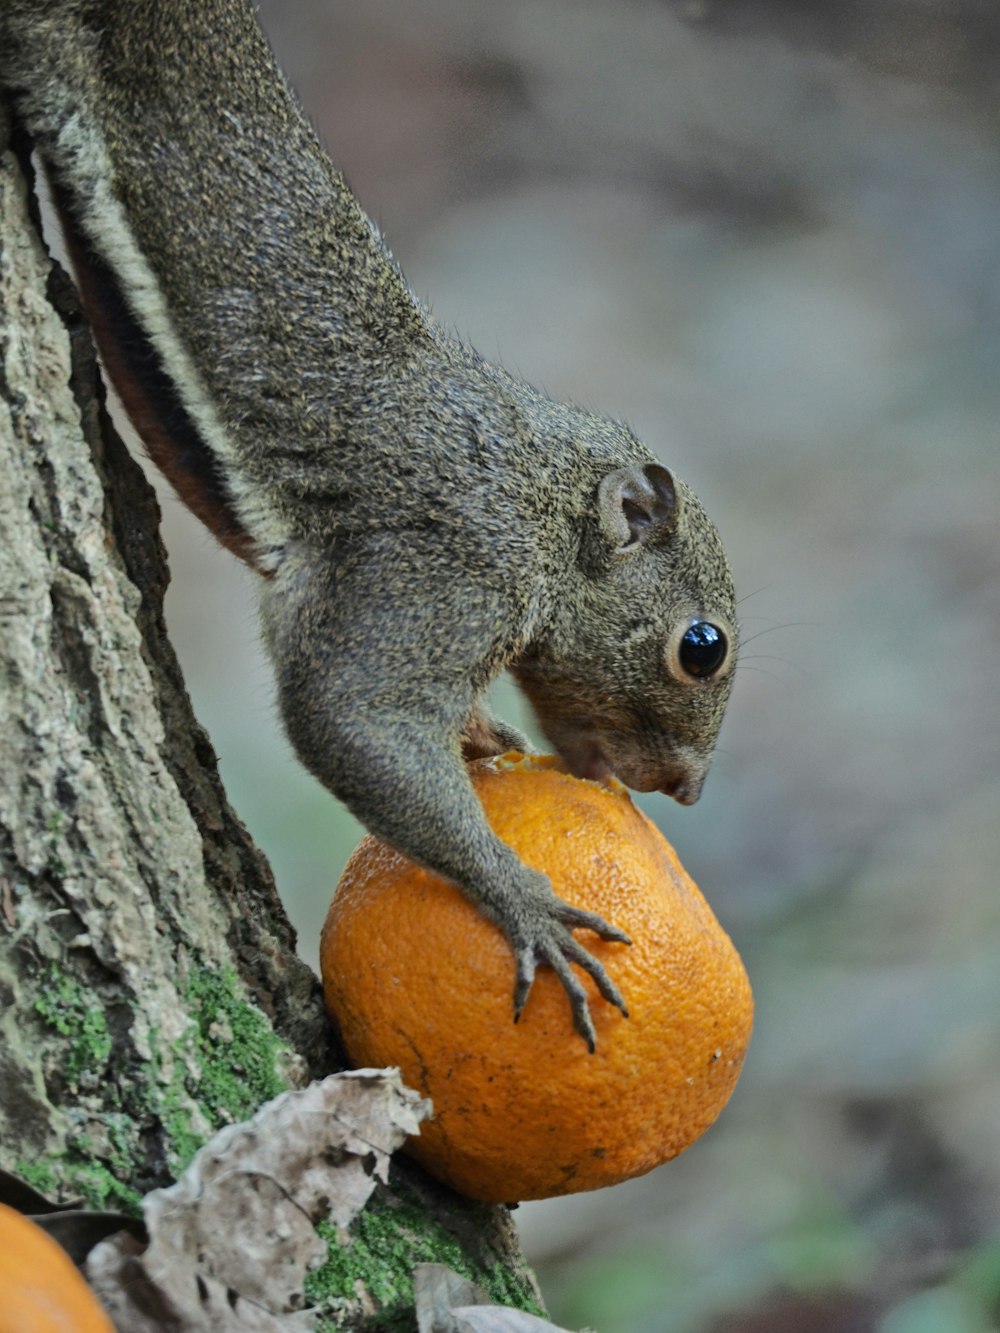 grey rodent eating orange fruit